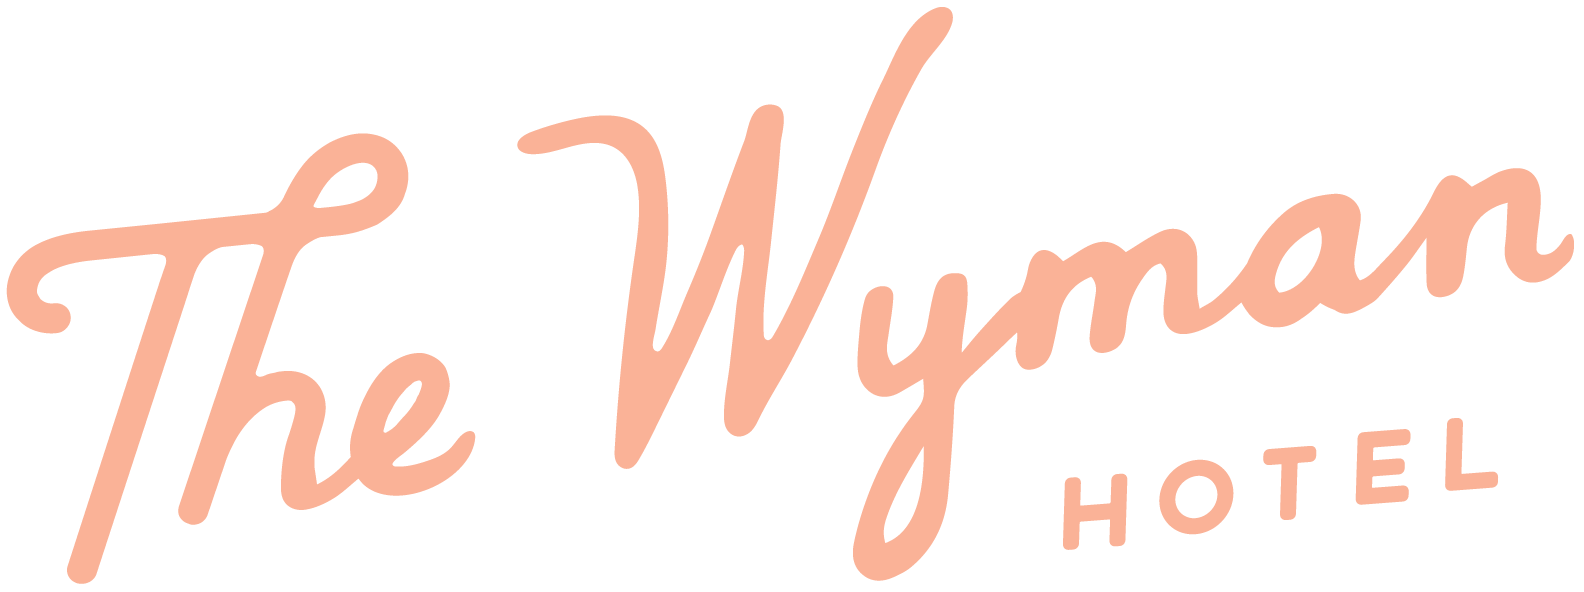 The Wyman Hotel